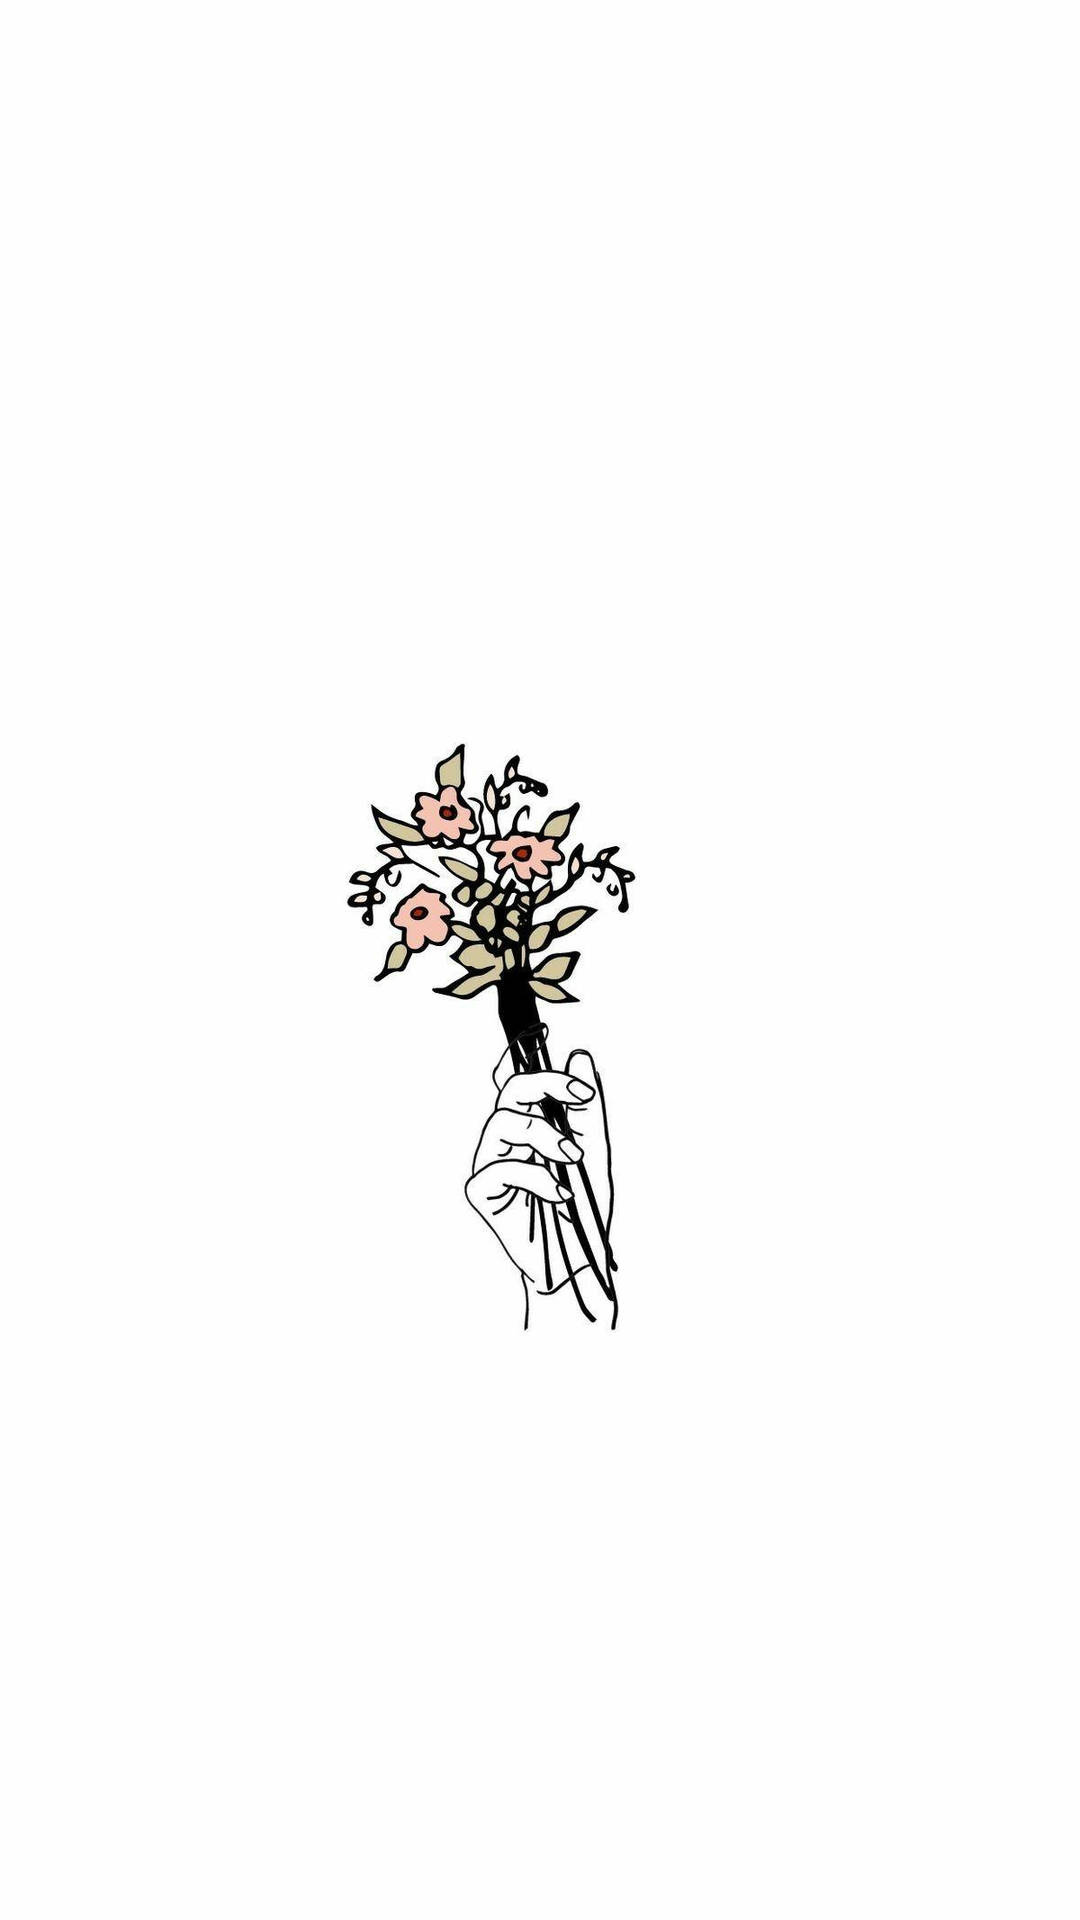 Minimalist Aesthetic Hand Holding Flowers Background